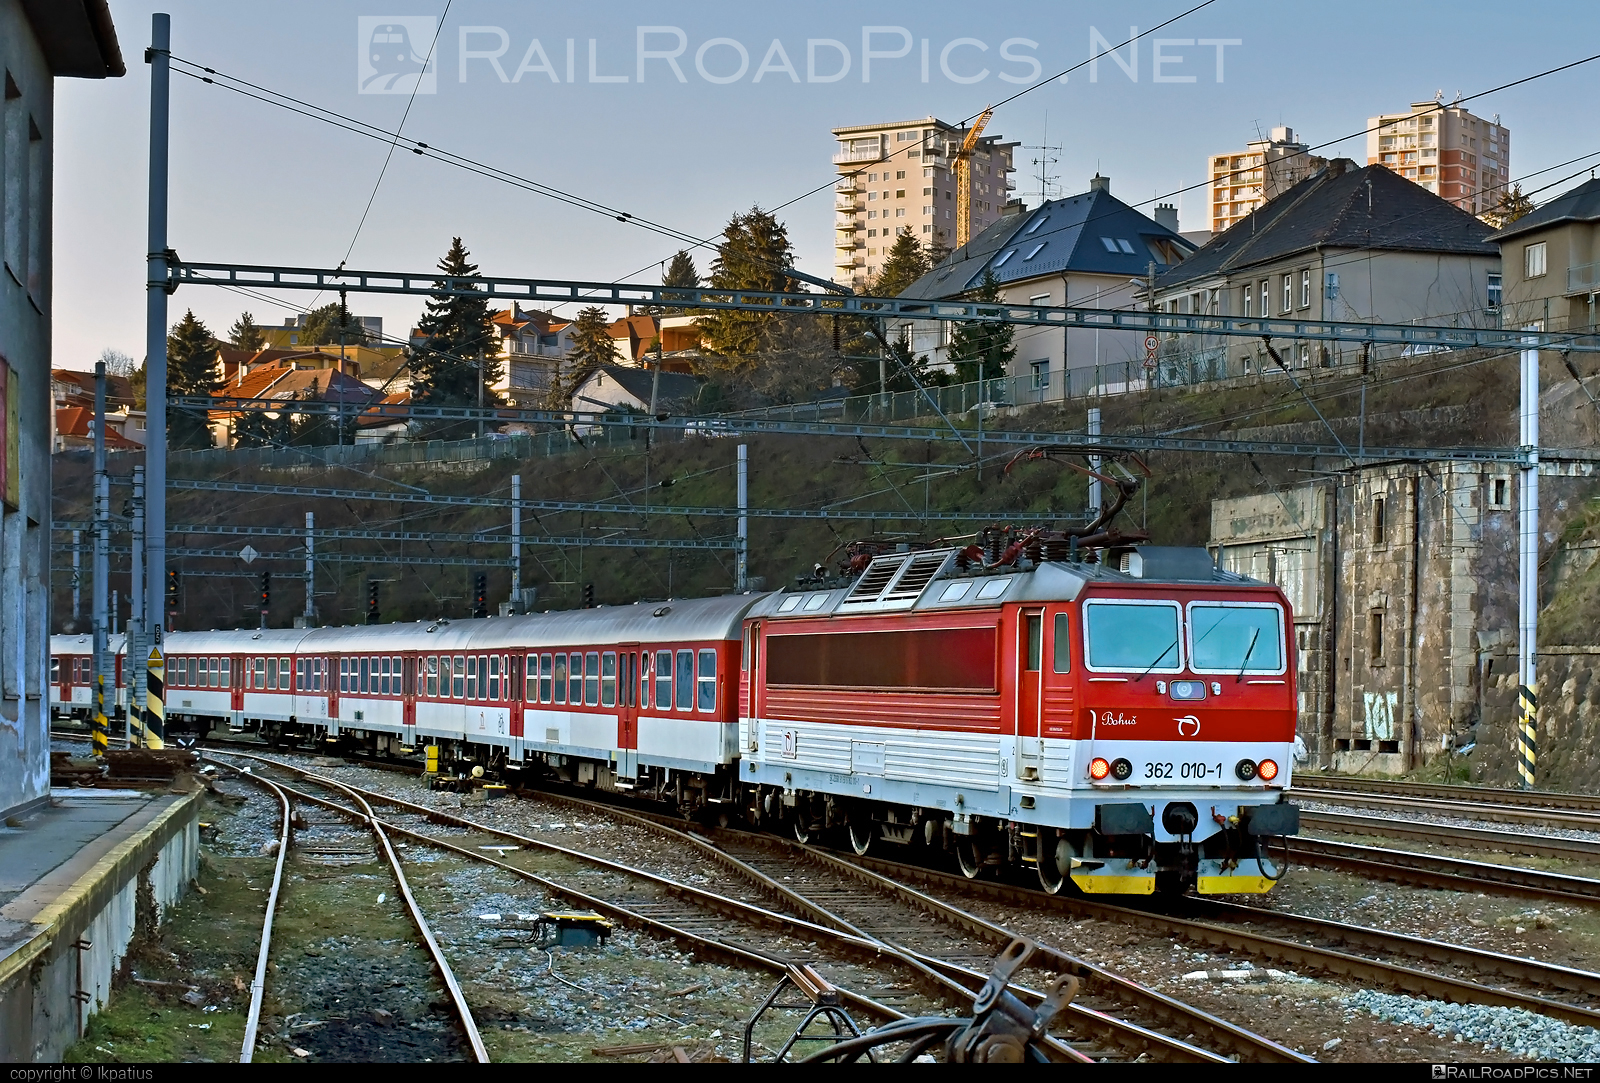 Škoda 69Er - 362 010-1 operated by Železničná Spoločnost' Slovensko, a.s. #ZeleznicnaSpolocnostSlovensko #eso #locomotive362 #rychleeso #skoda #skoda69er #zssk